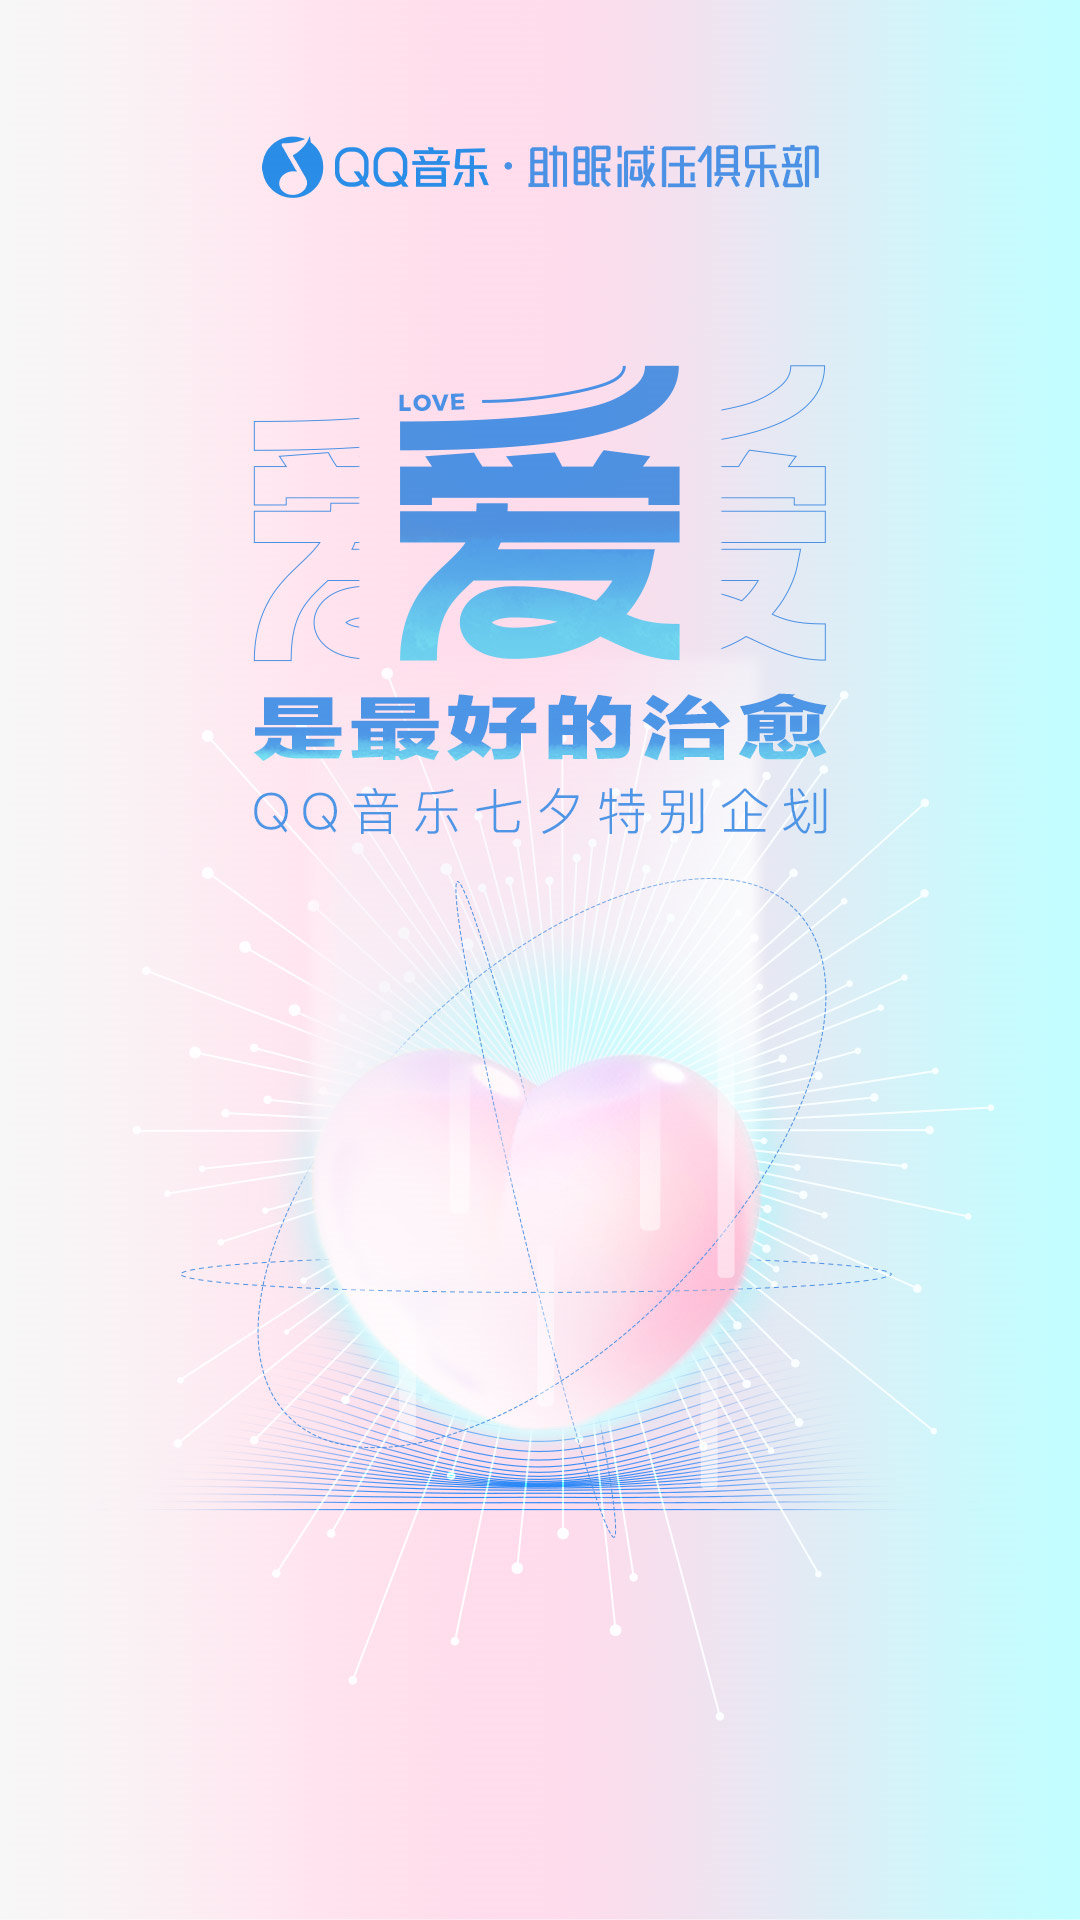 QQ 音乐推出七夕特别企划「爱，是最好的治愈」